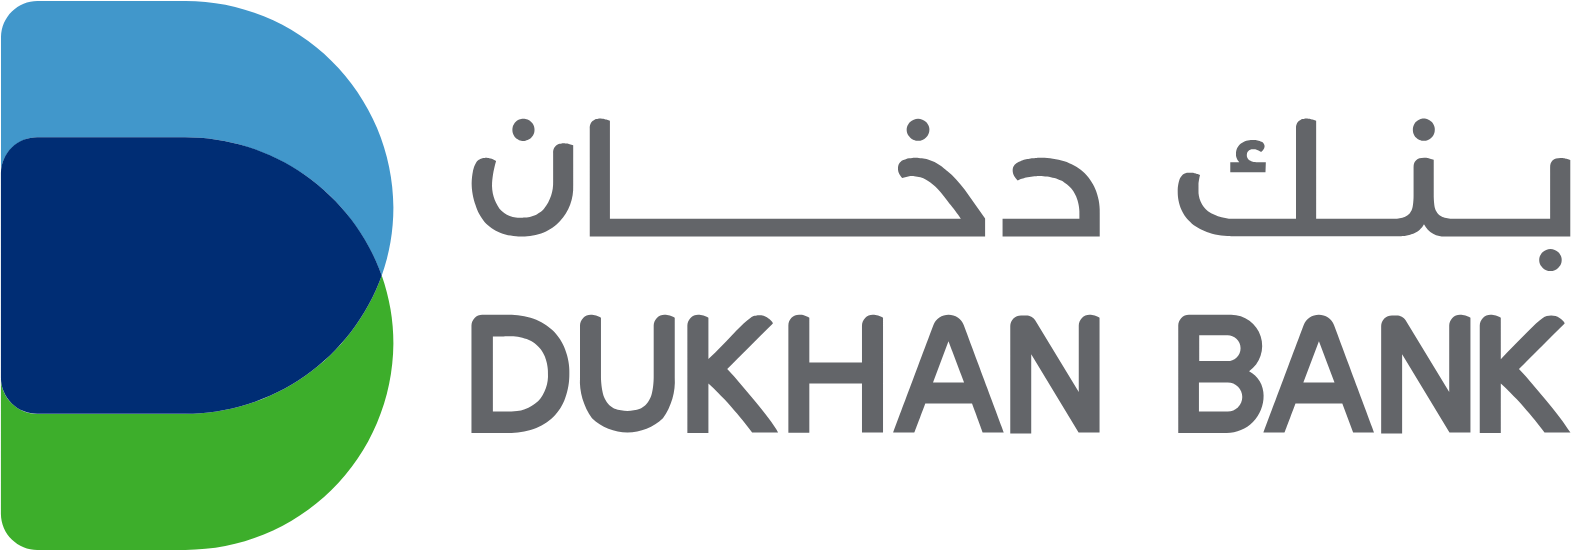 Dukhan Bank logo large (transparent PNG)